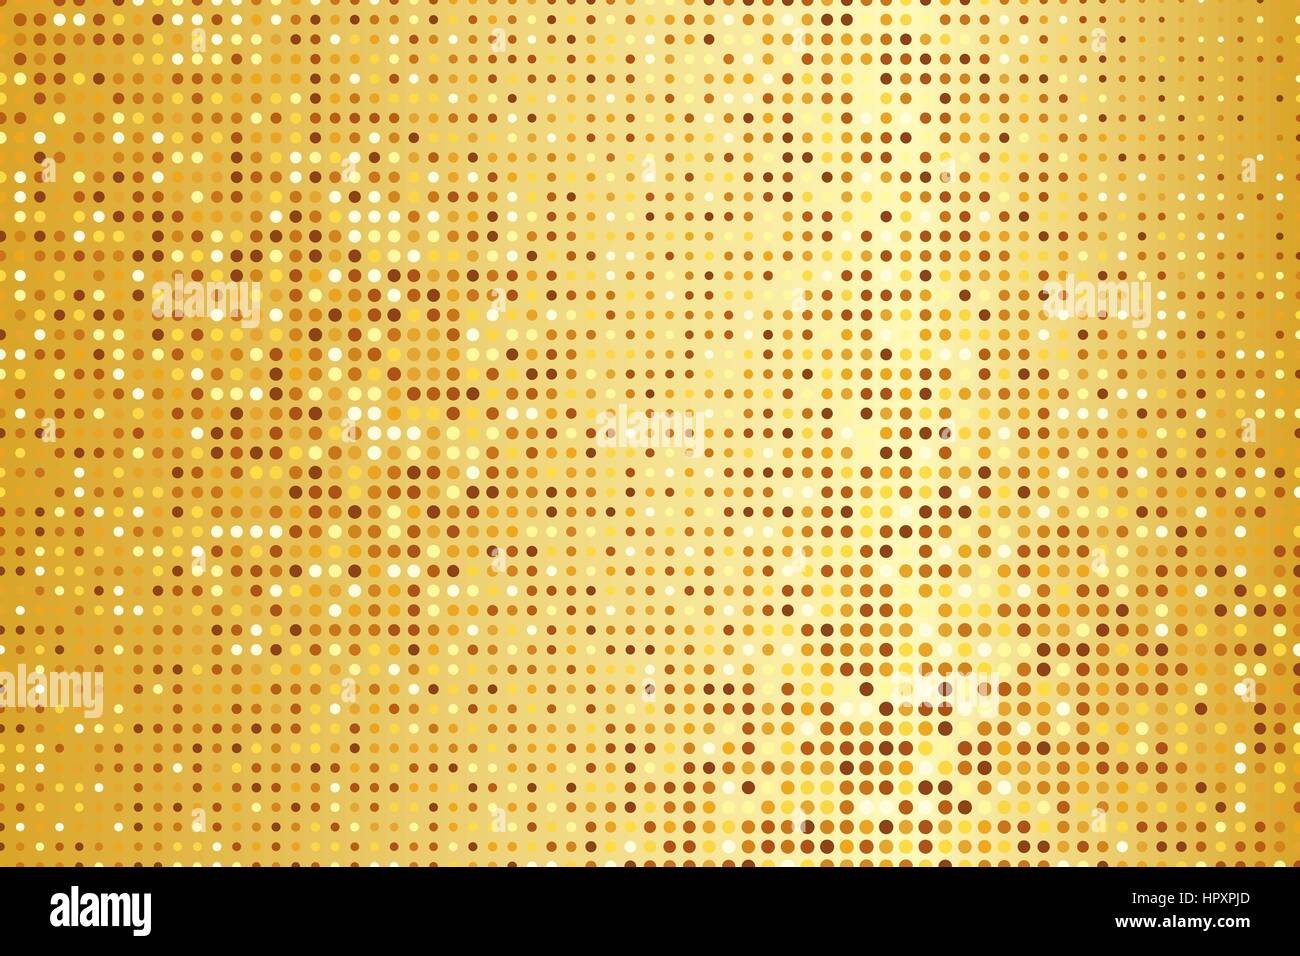 Abstrat Halftone Gold Dots Horizon Seamless Pattern Royalty Free SVG,  Cliparts, Vectors, and Stock Illustration. Image 134975589.